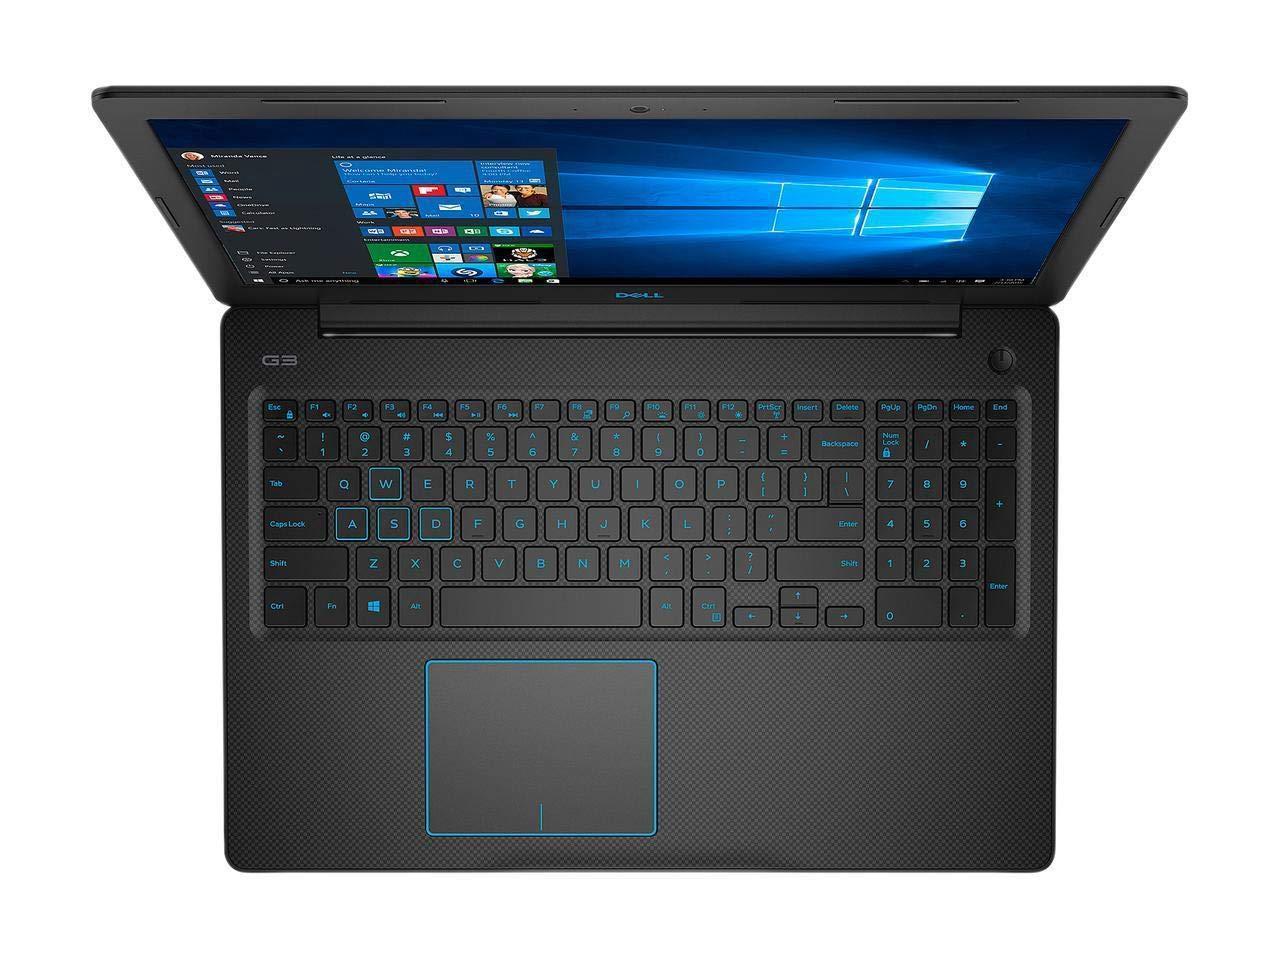 Newest Dell 15.6" FHD IPS High-Performance Gaming Laptop | Intel Core i5-8300H Quad-Core|8GB DDR4 2666 MHz |512G SSD+1TB HDD |NVIDIA GeForce GTX 1050Ti 4GB |Backlit Keyboard | MaxxAudio|Windows 10